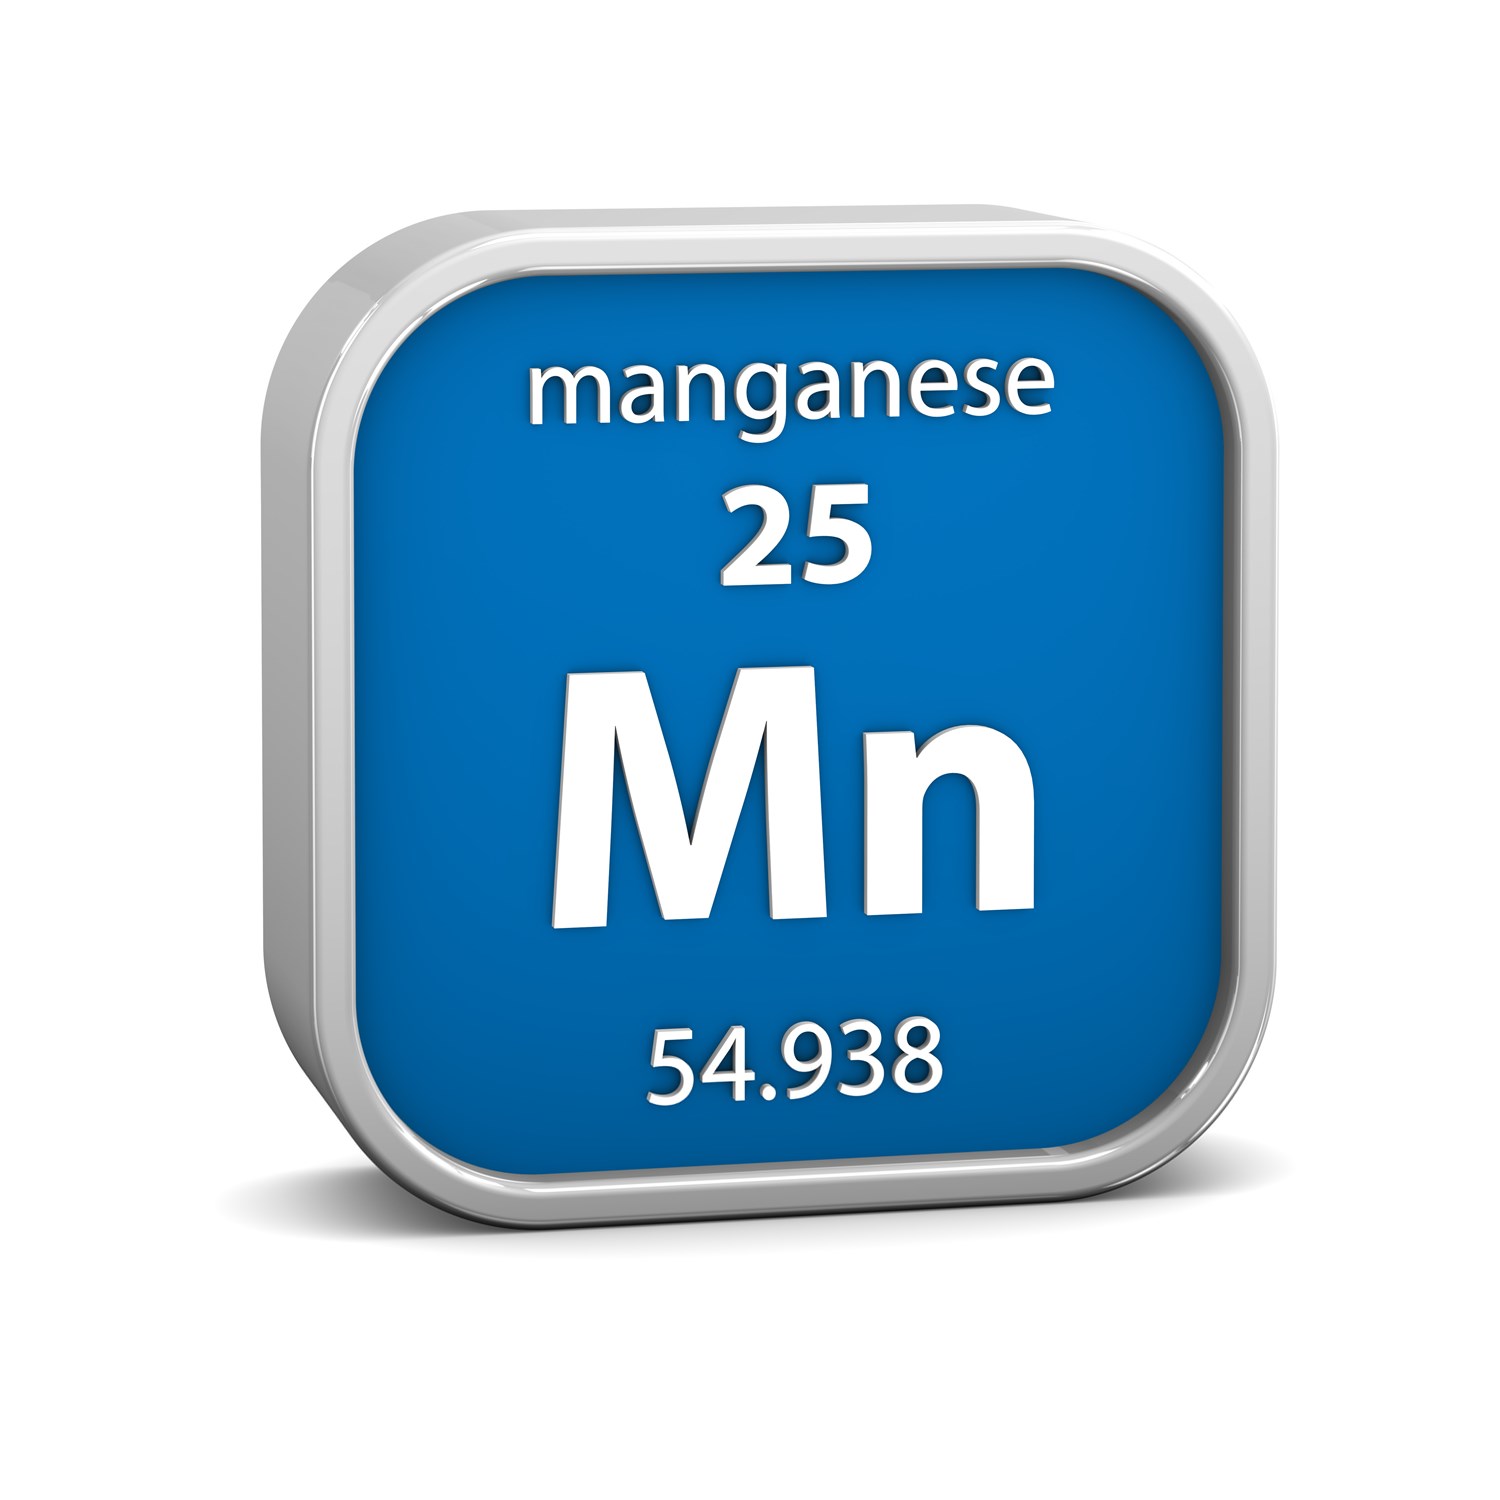 Protéinate de manganèse (minerai)   